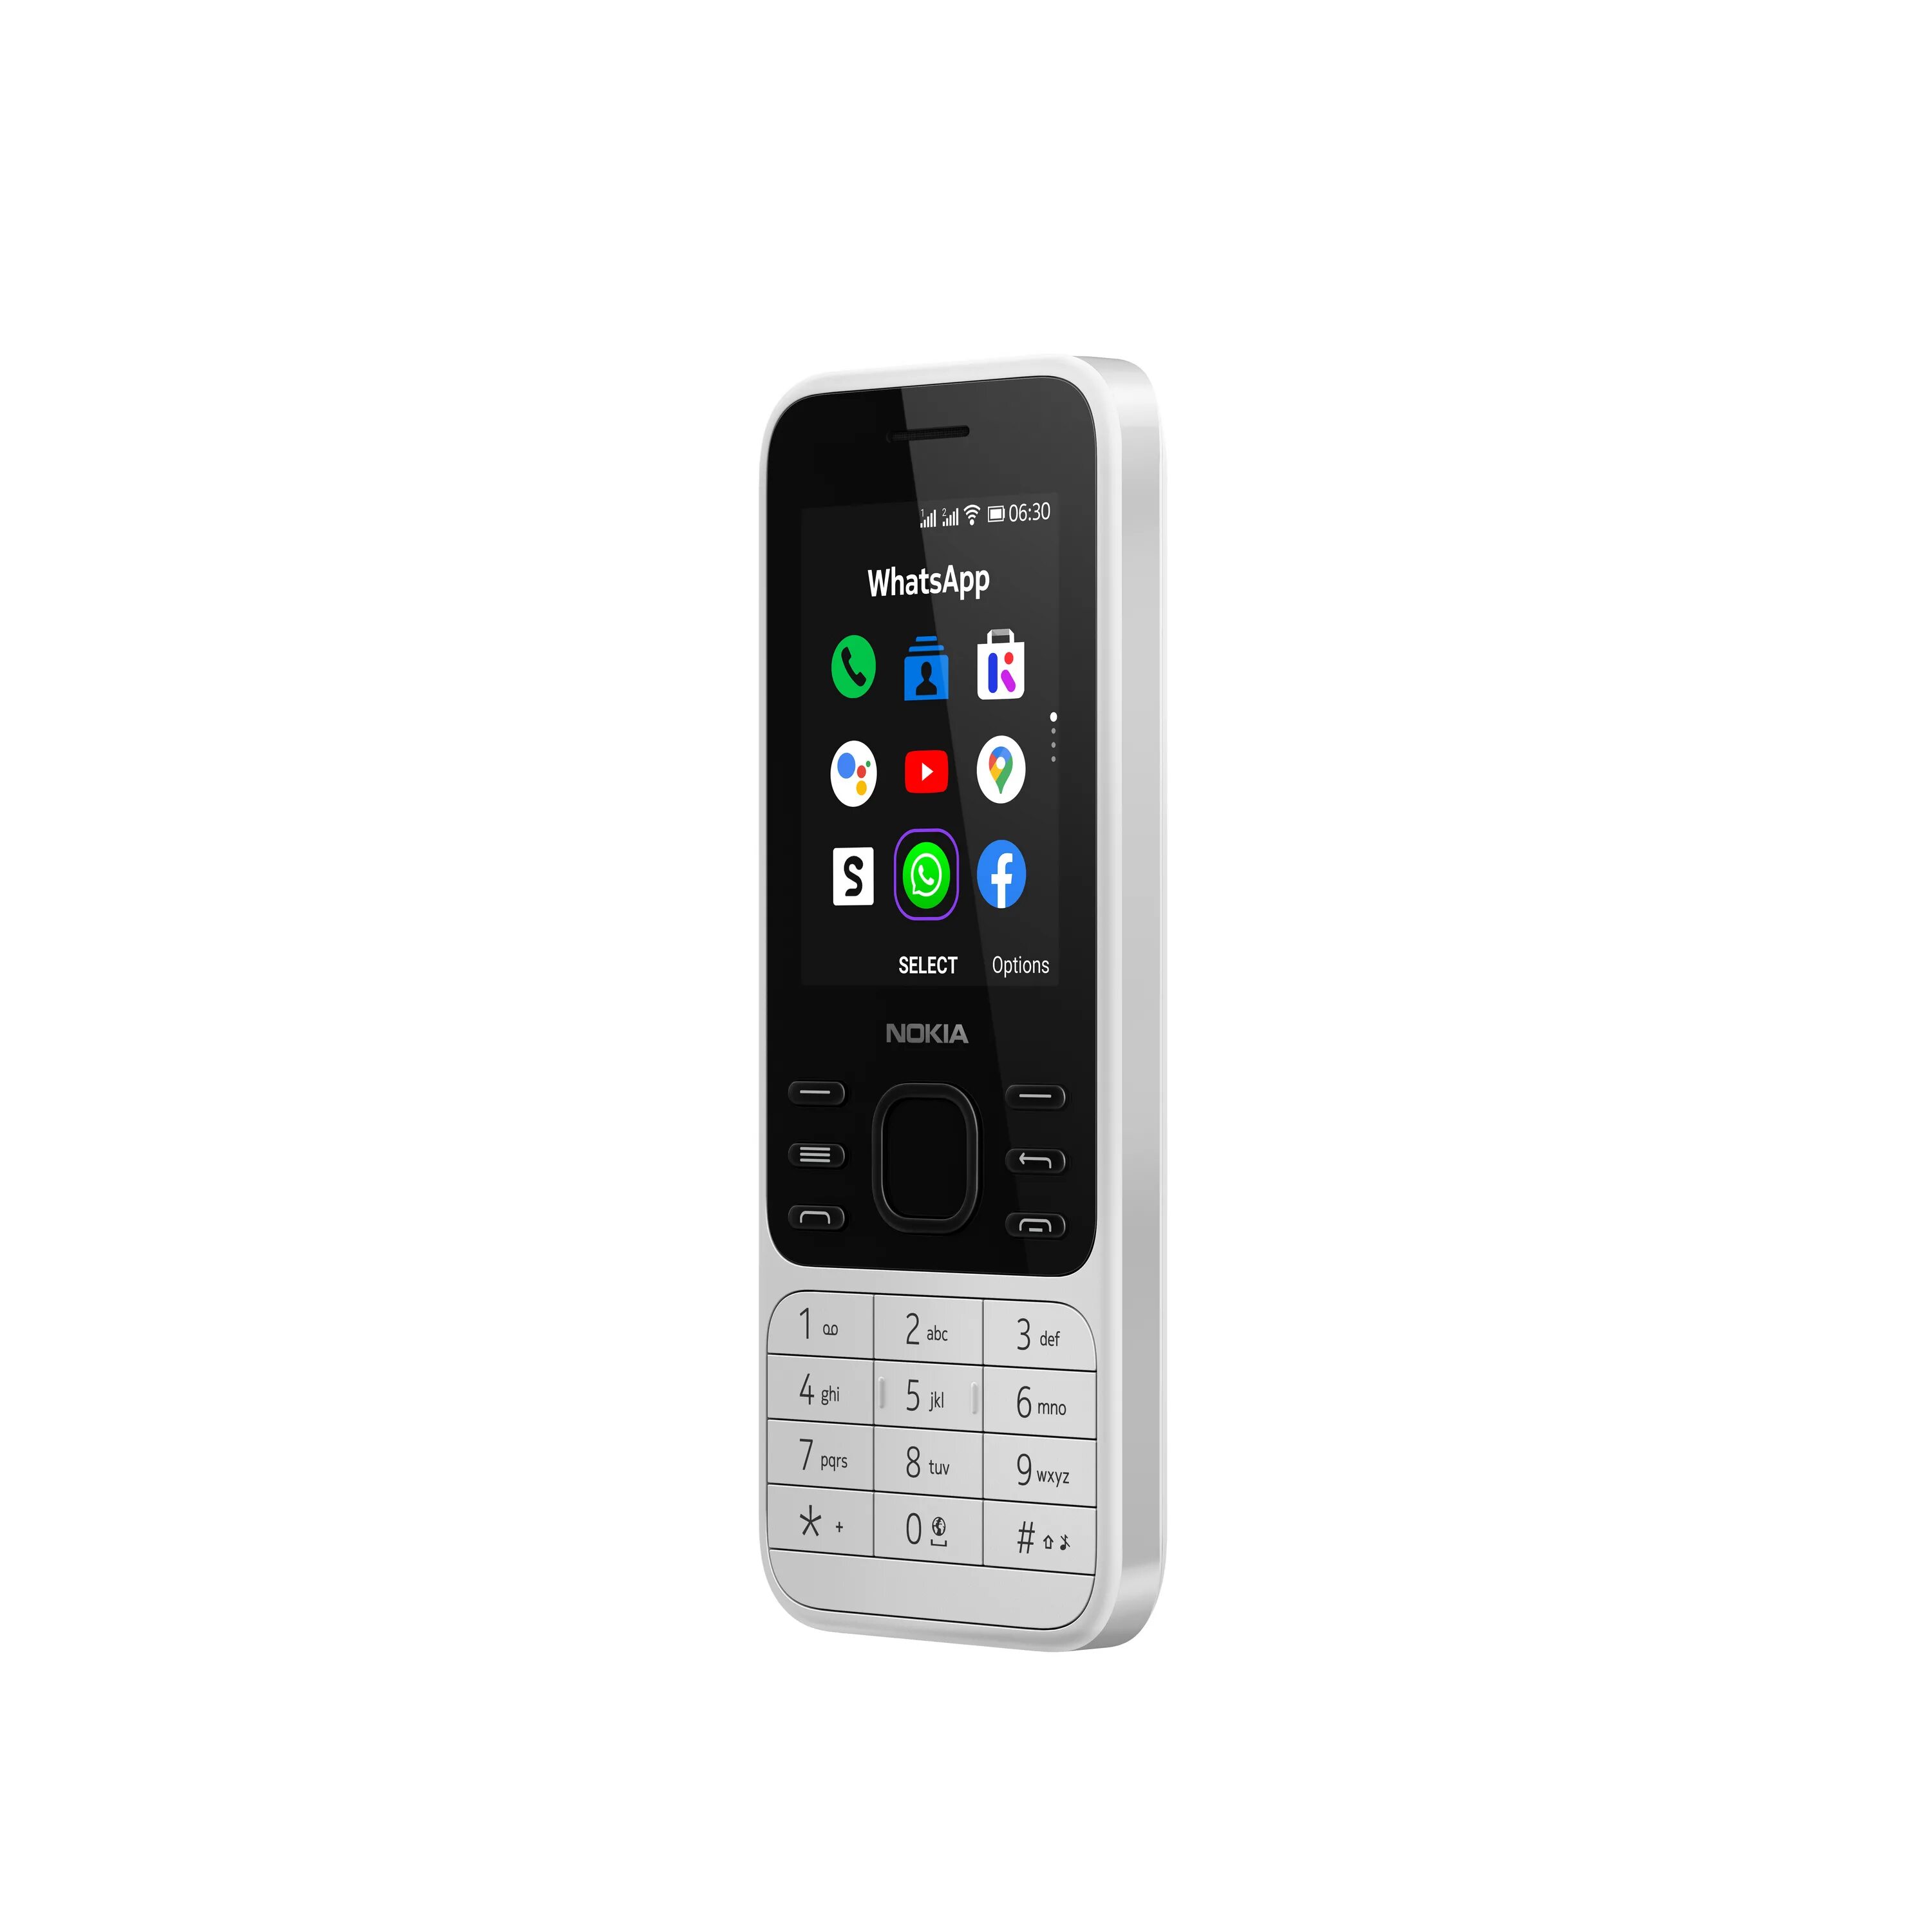 6300 4g купить. Nokia 6300 4g (ta-1294) White. Nokia 6300 4g DS White. Nokia 6300 DS (ta-1294) серый. Nokia 6300 4g DS White ta-1294.